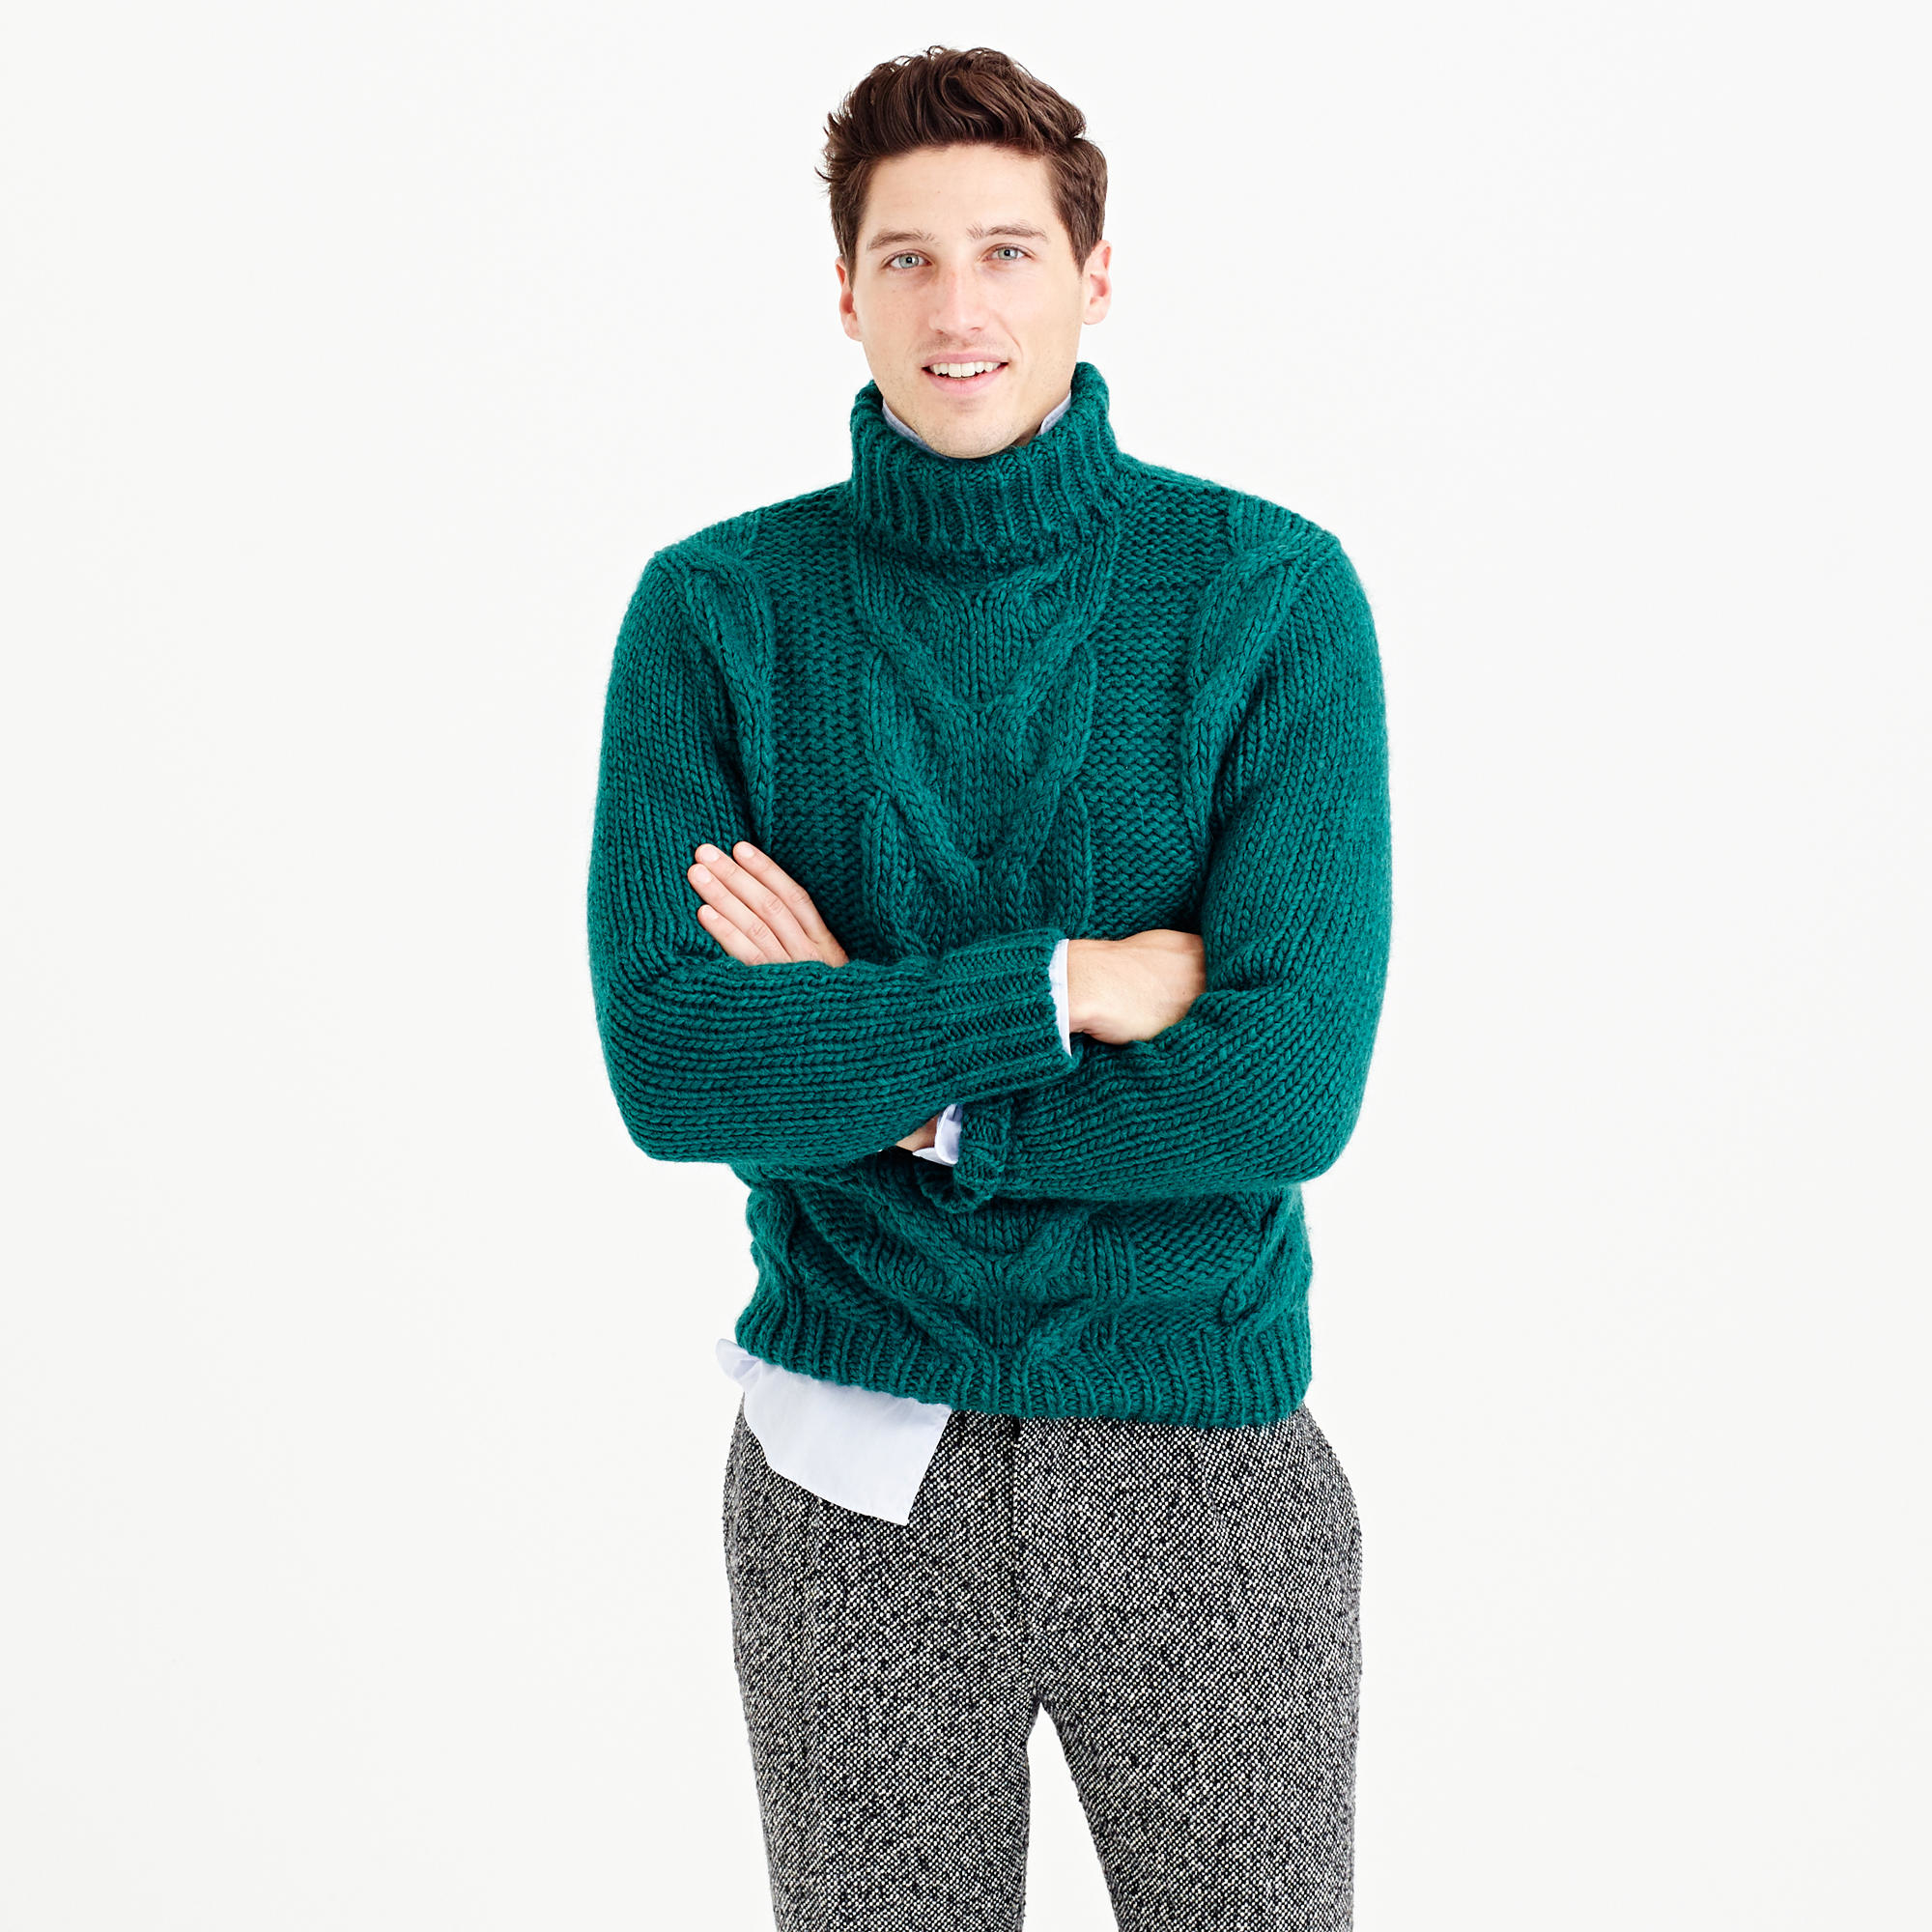 Lyst - J.Crew Italian Wool Cable Turtleneck Sweater in Green for Men